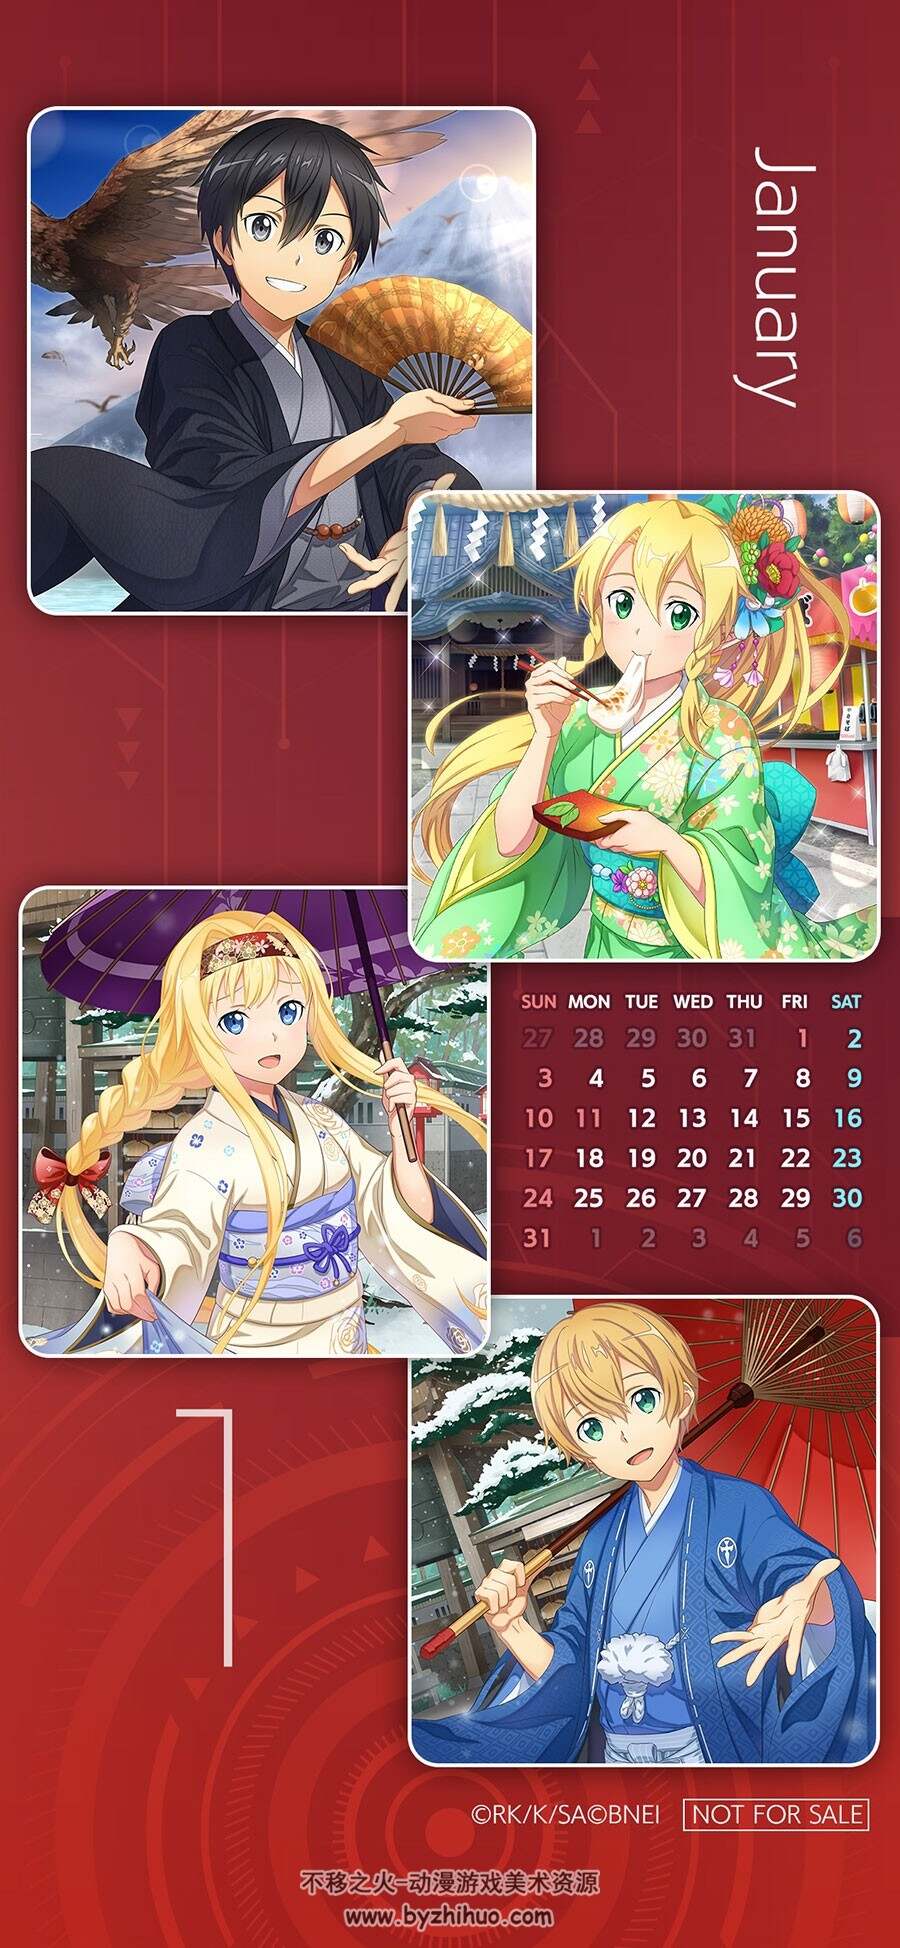 SAO 2021 Mobile Calendar Wallpapers 日历画集 百度网盘下载